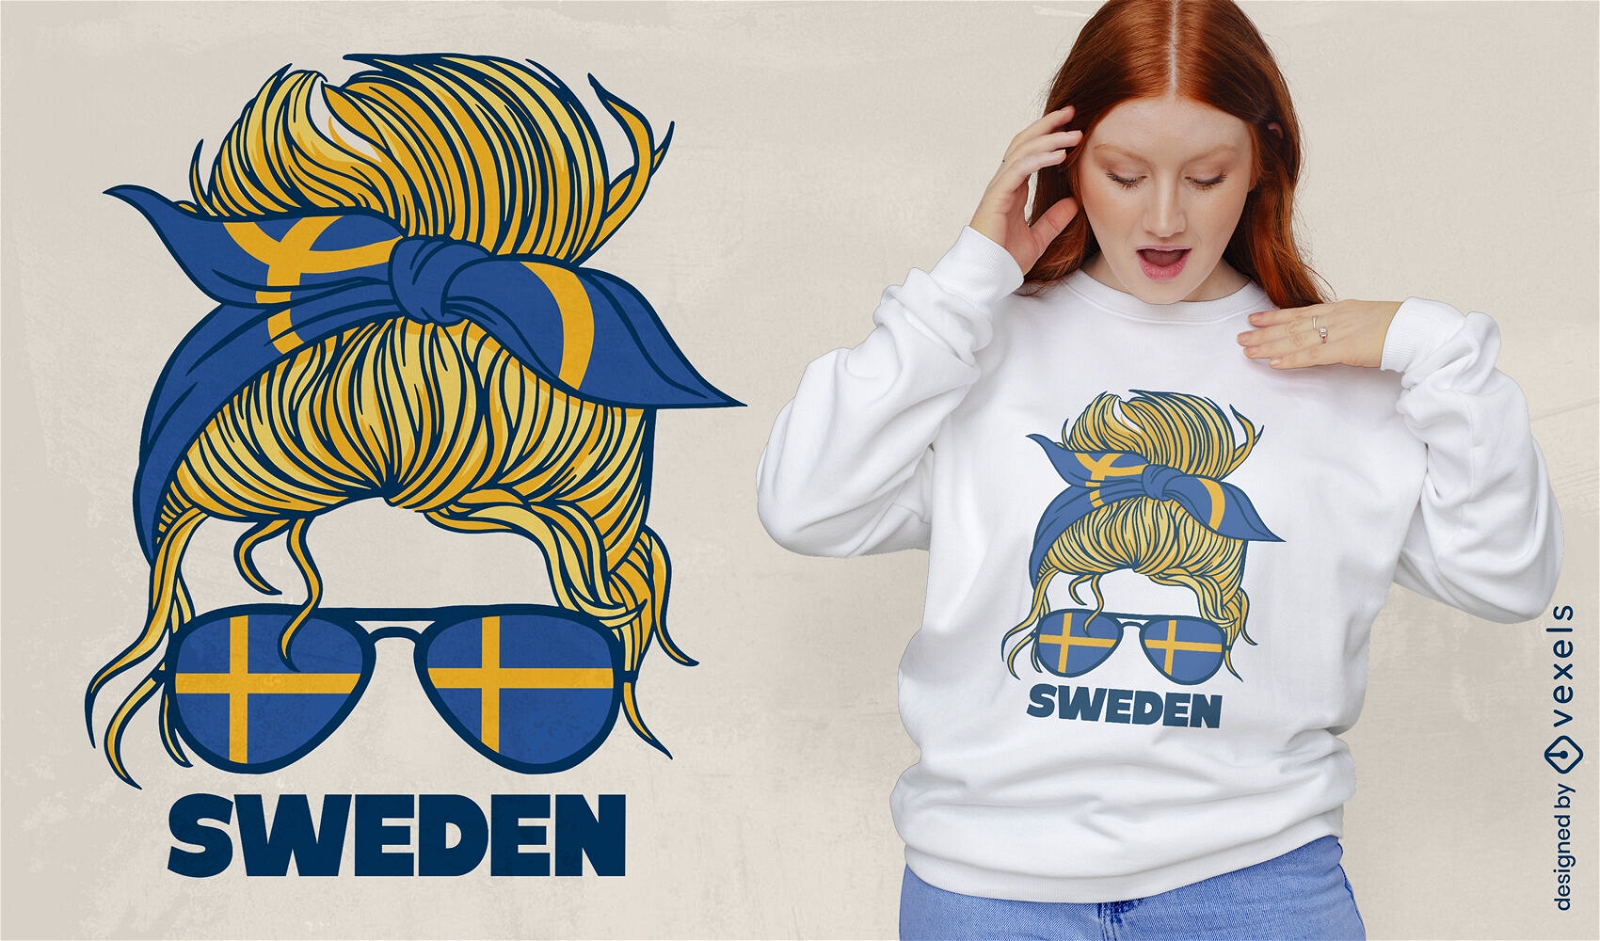 Dise?o de camiseta de mujer sueca.